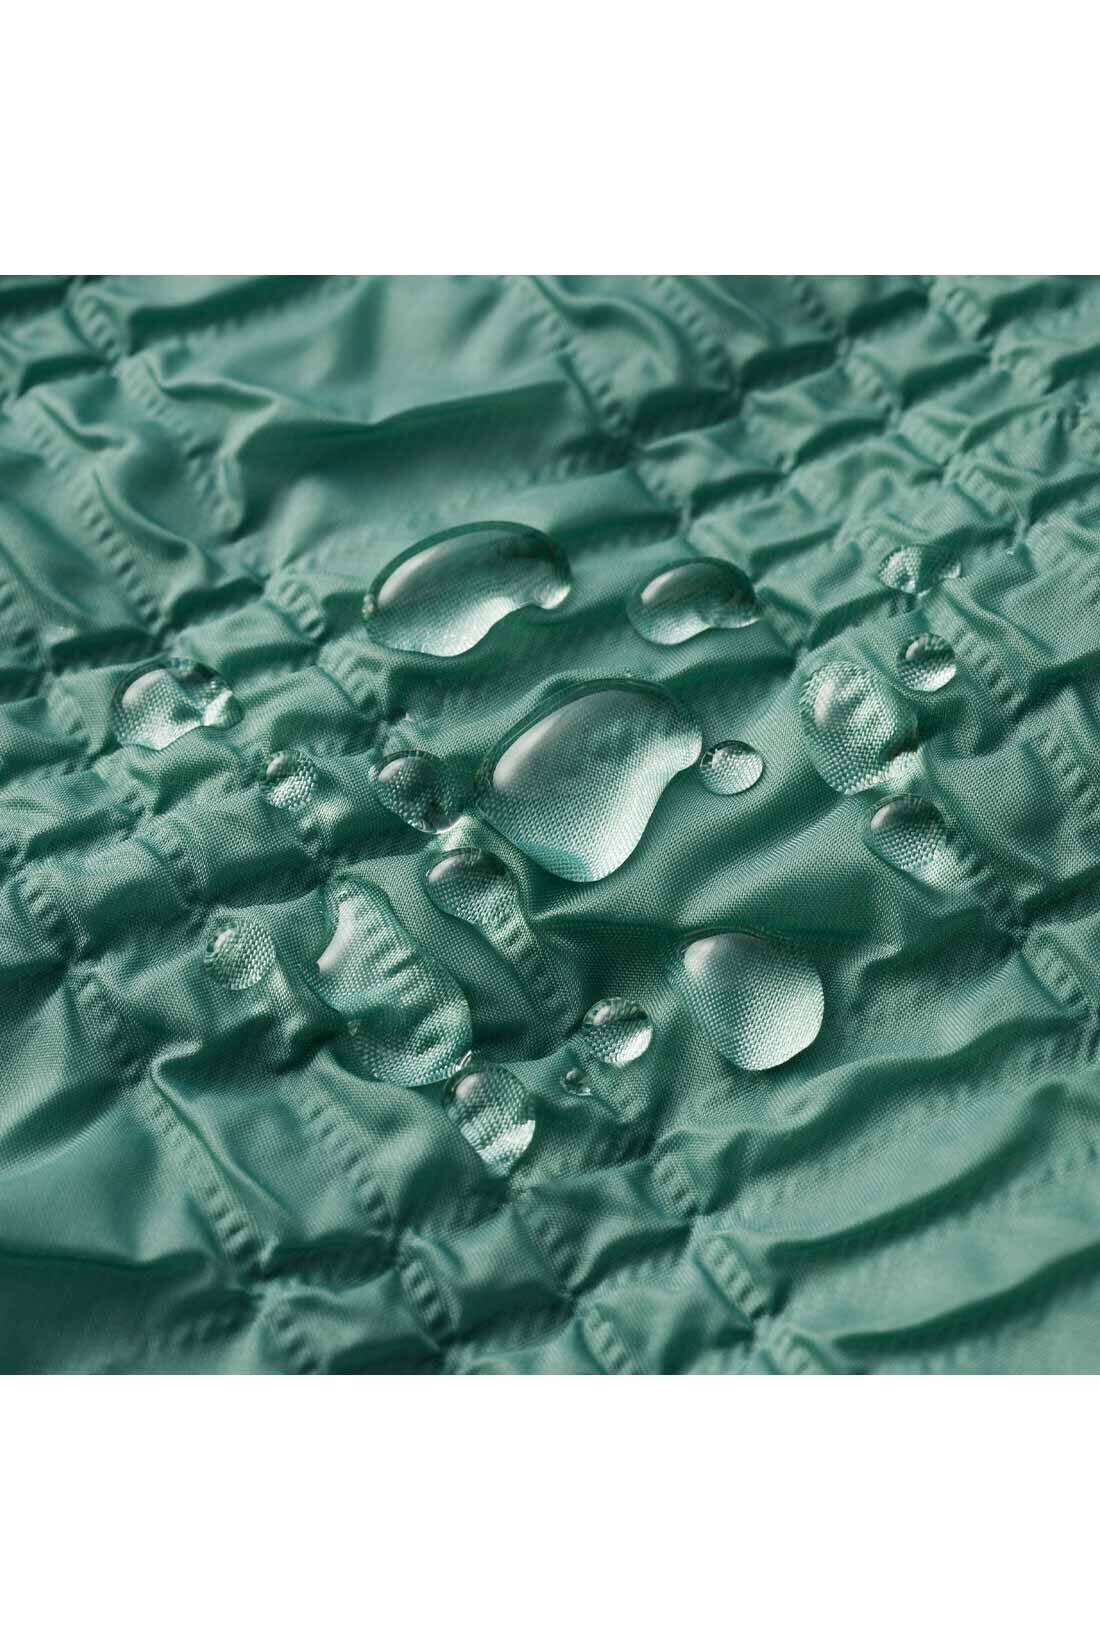 IEDIT|IEDIT[イディット]　エンボス加工をほどこした撥水（はっすい）素材の切り替えスカート〈モスグリーン〉|撥水加工をほどこしたナイロン素材はテカリをおさえた上品な素材感。